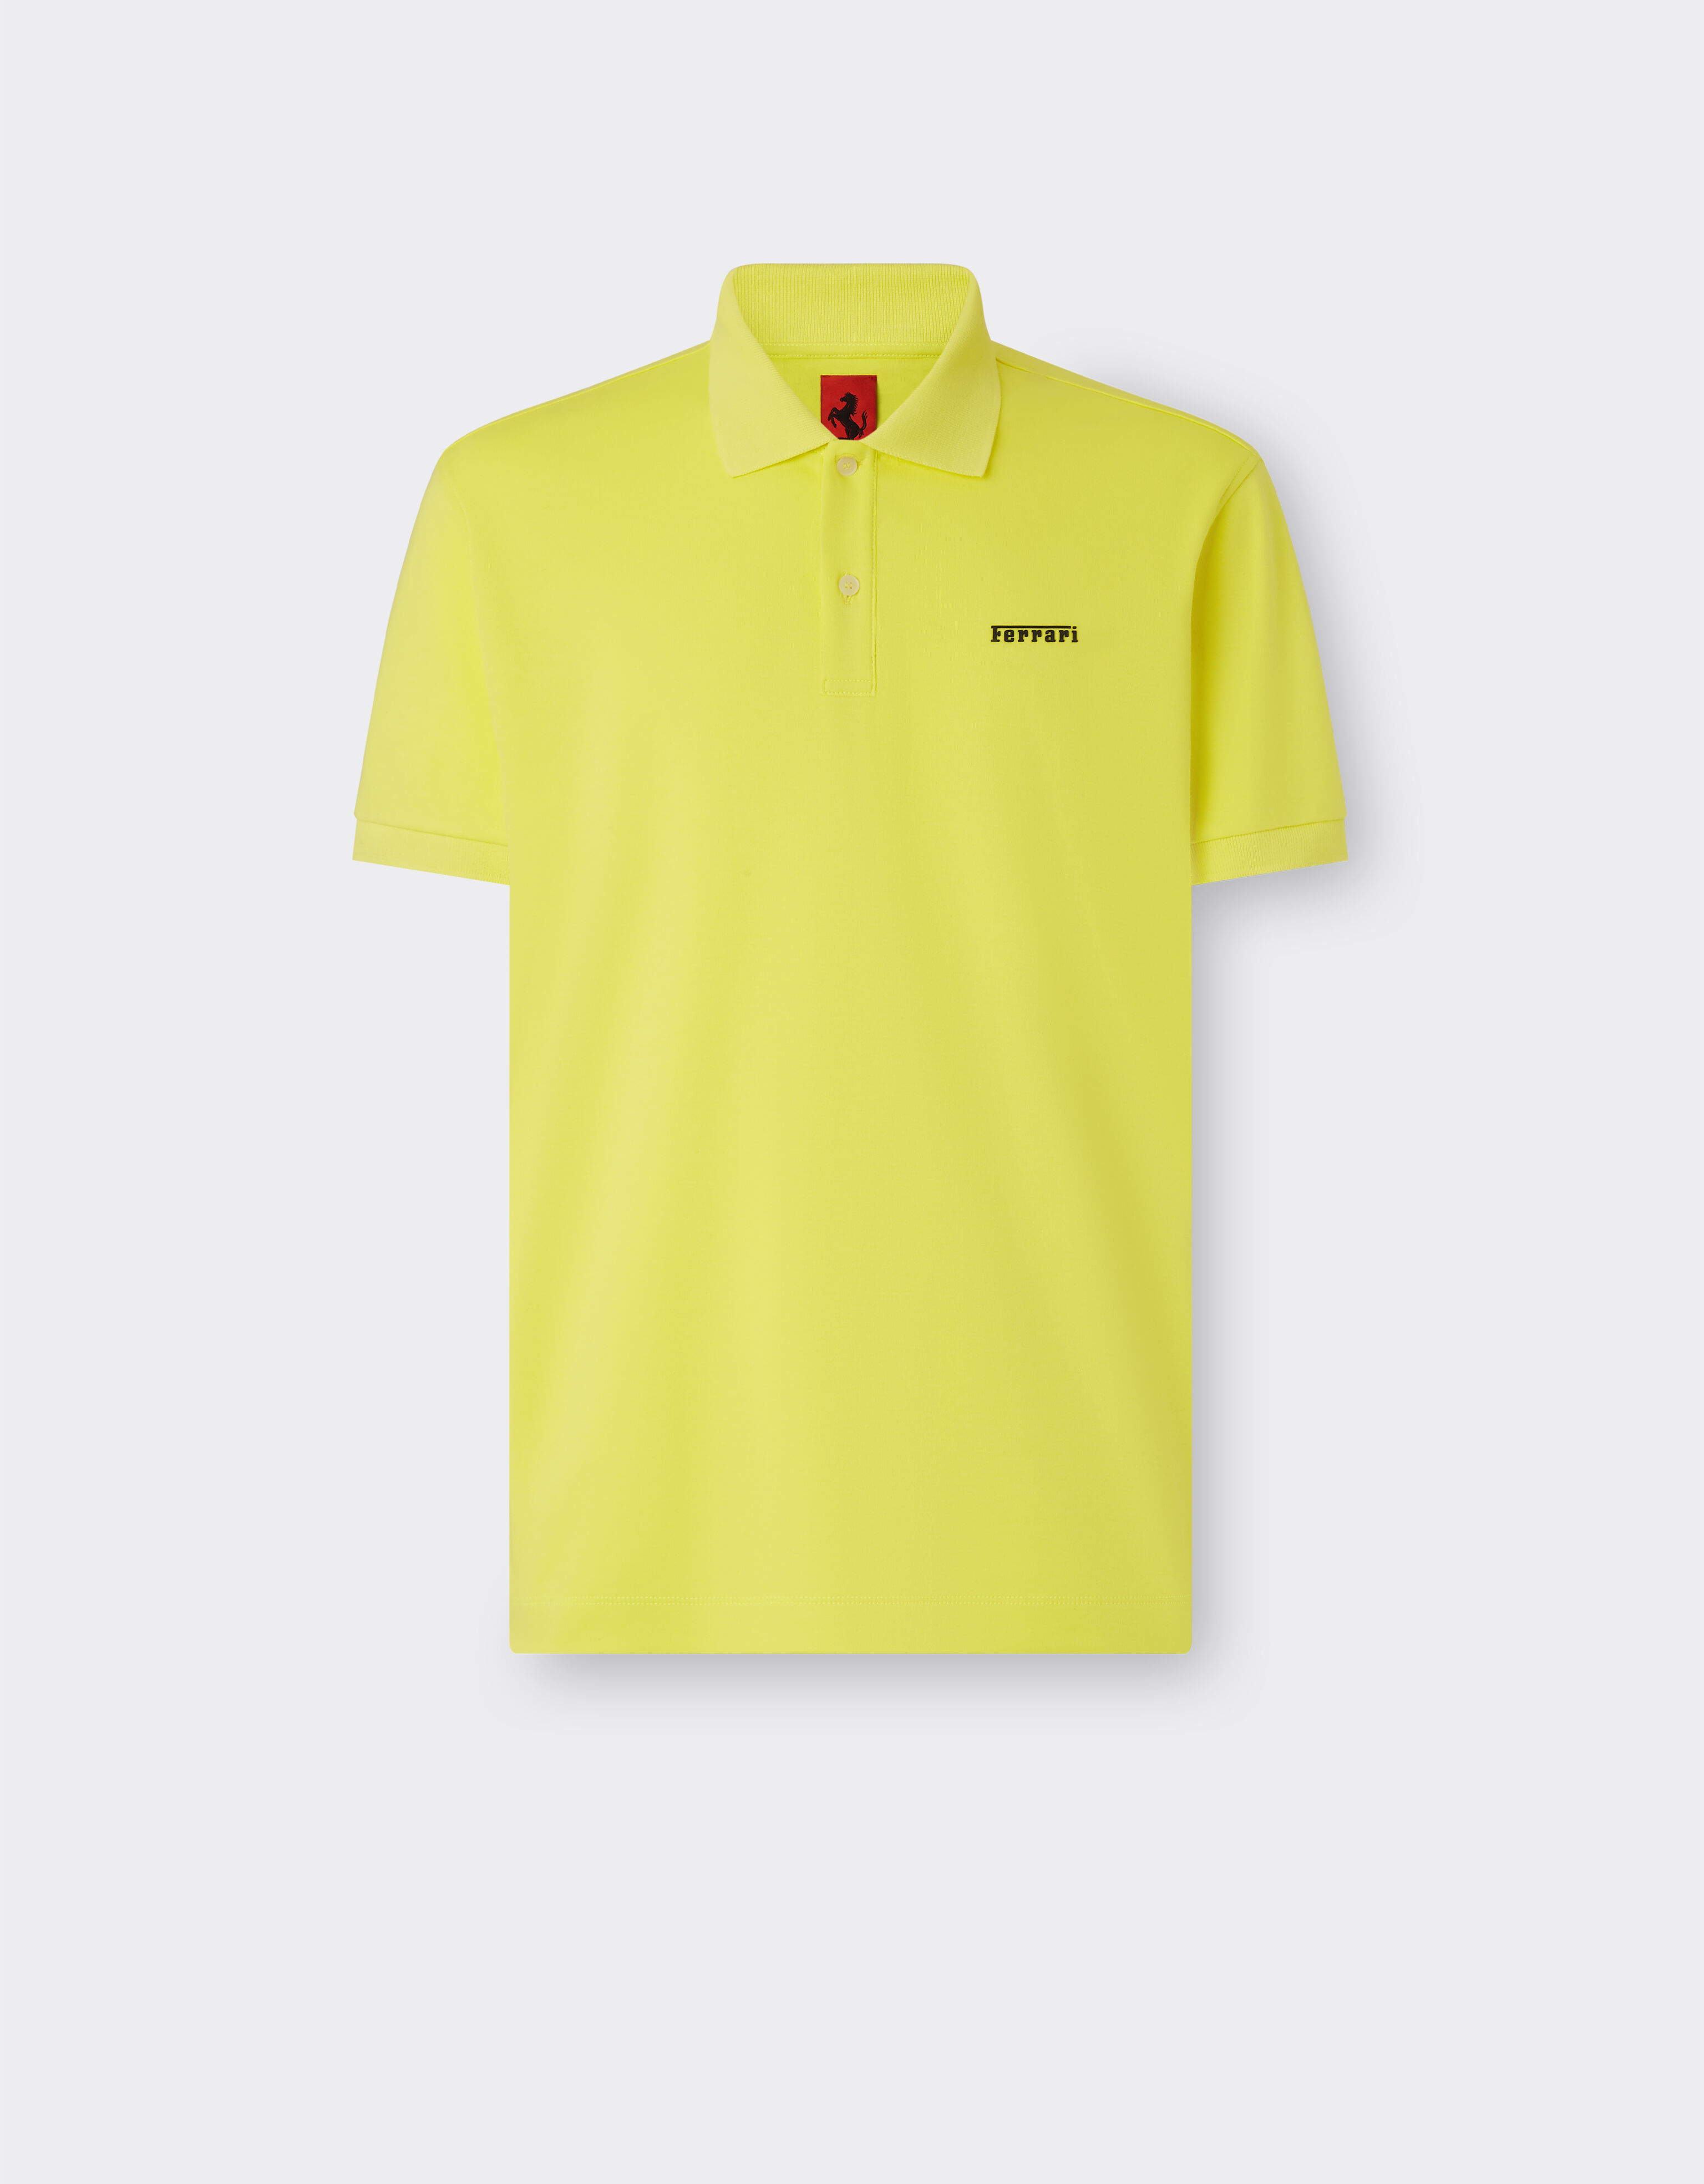 Ferrari Short-sleeved cotton polo shirt with Ferrari logo Giallo Modena 48300f